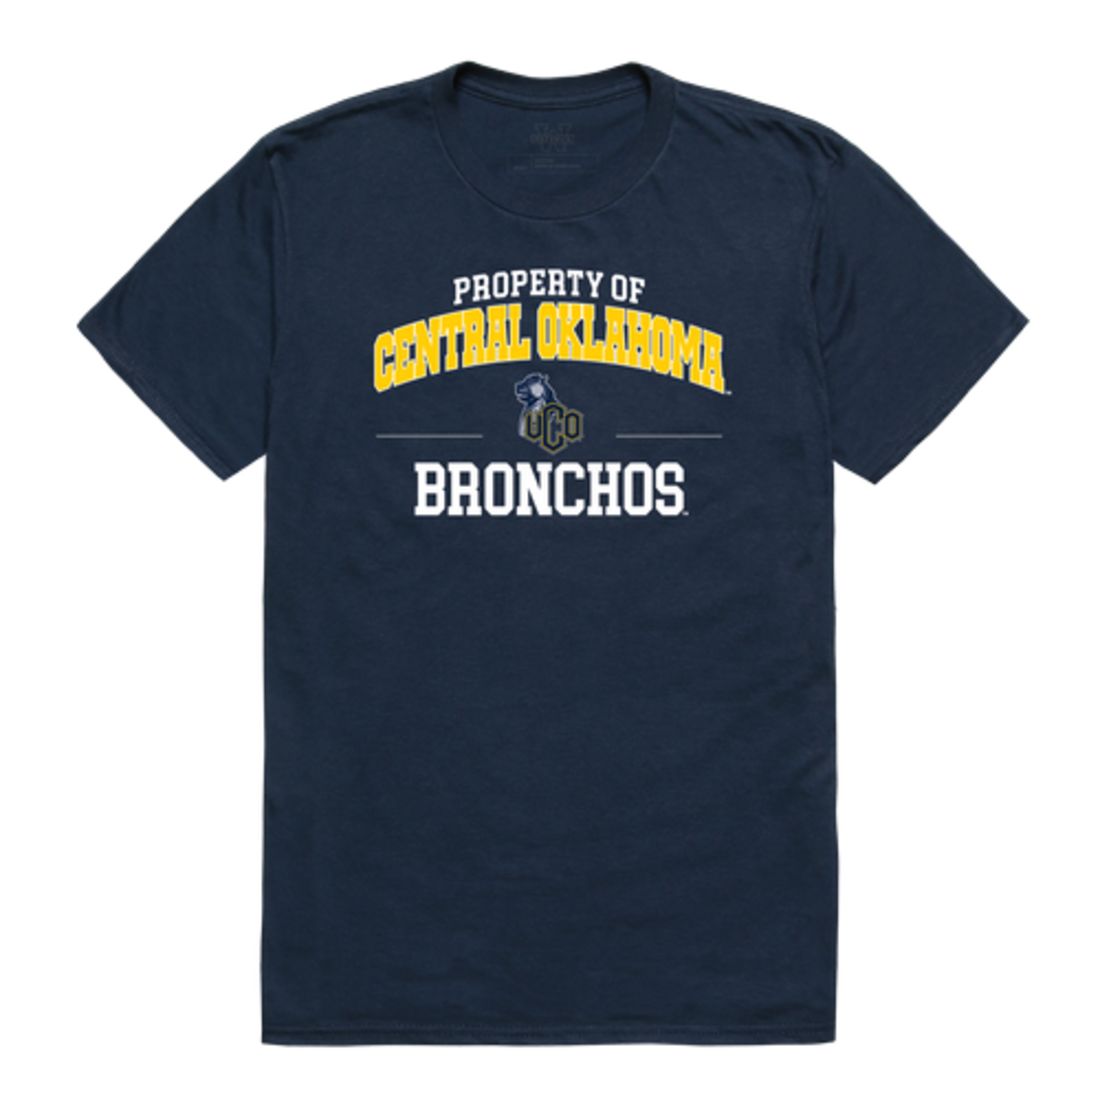 University of Central Oklahoma Bronchos Property T-Shirt Tee